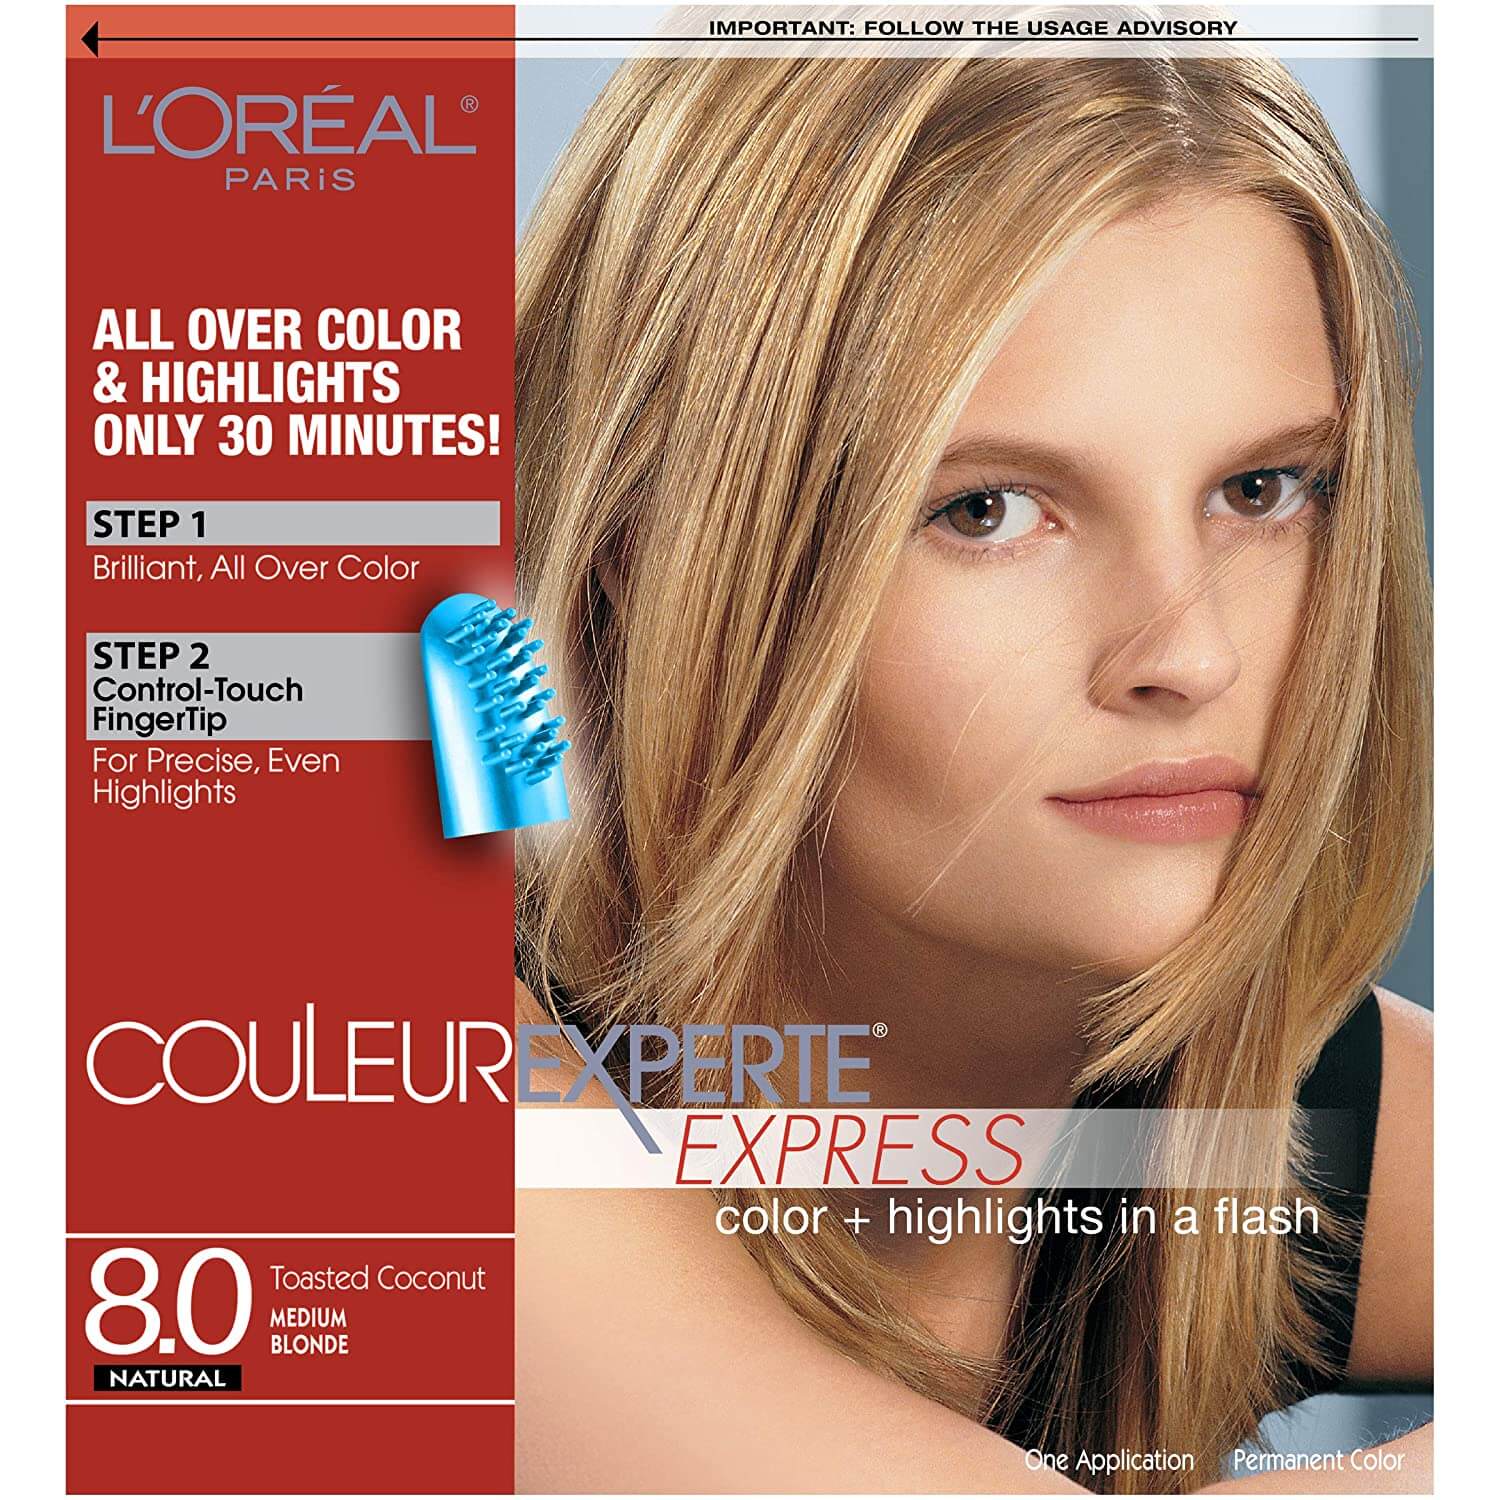  Best for Base Color & Highlights: L'Oreal Paris Couleur Experte 2-Step Home Hair Color & Highlights Kit